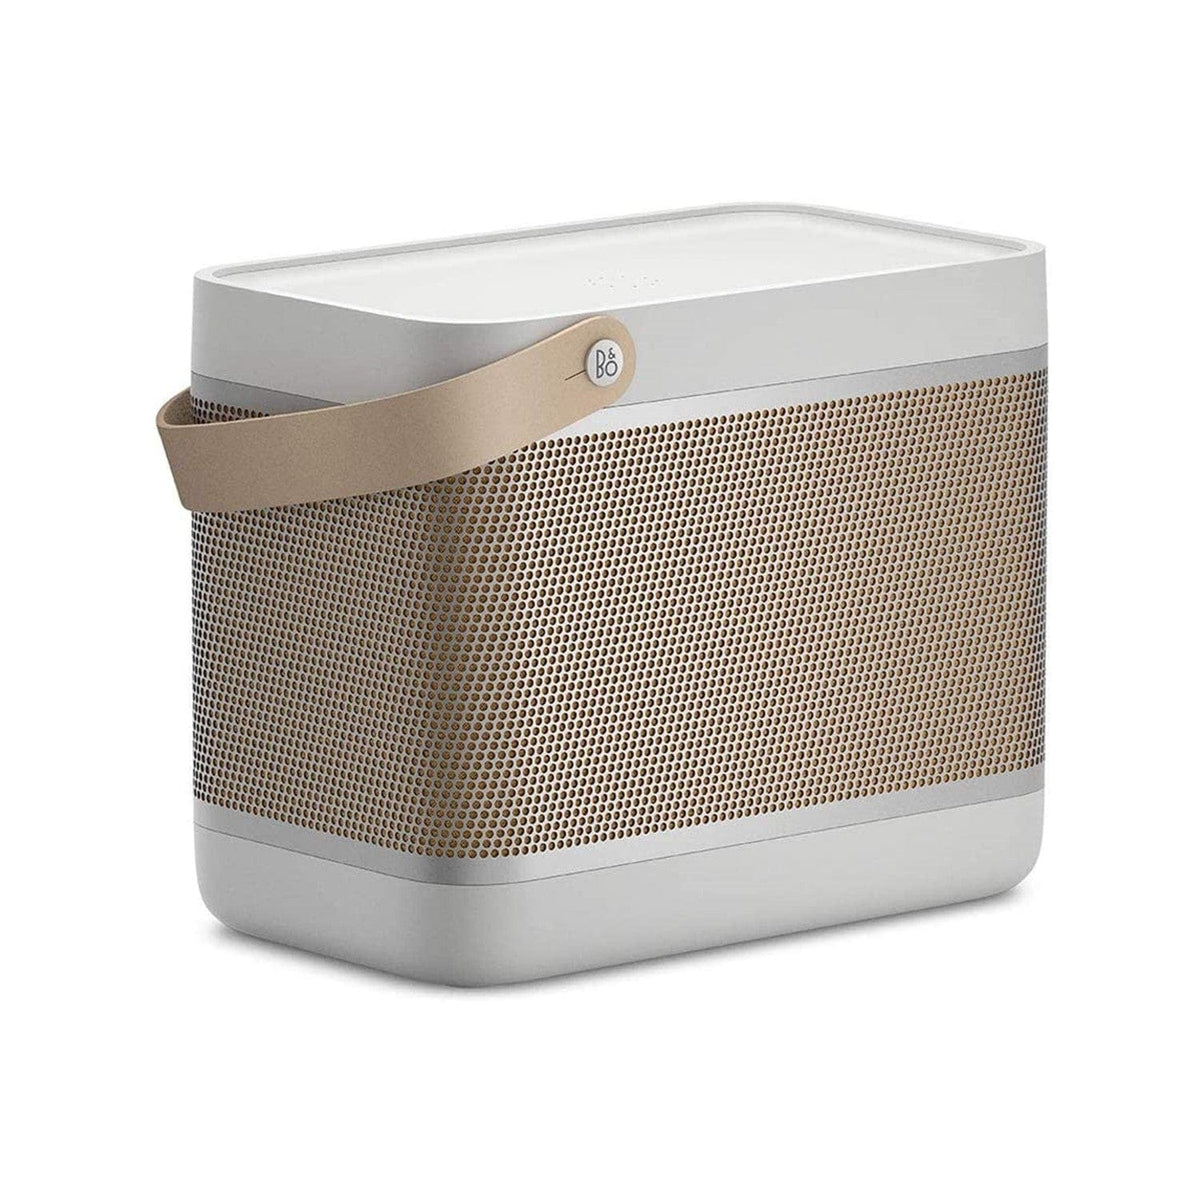 B&O Bang & Olufsen Beolit 20 Wireless Bluetooth Speaker Grey Mist